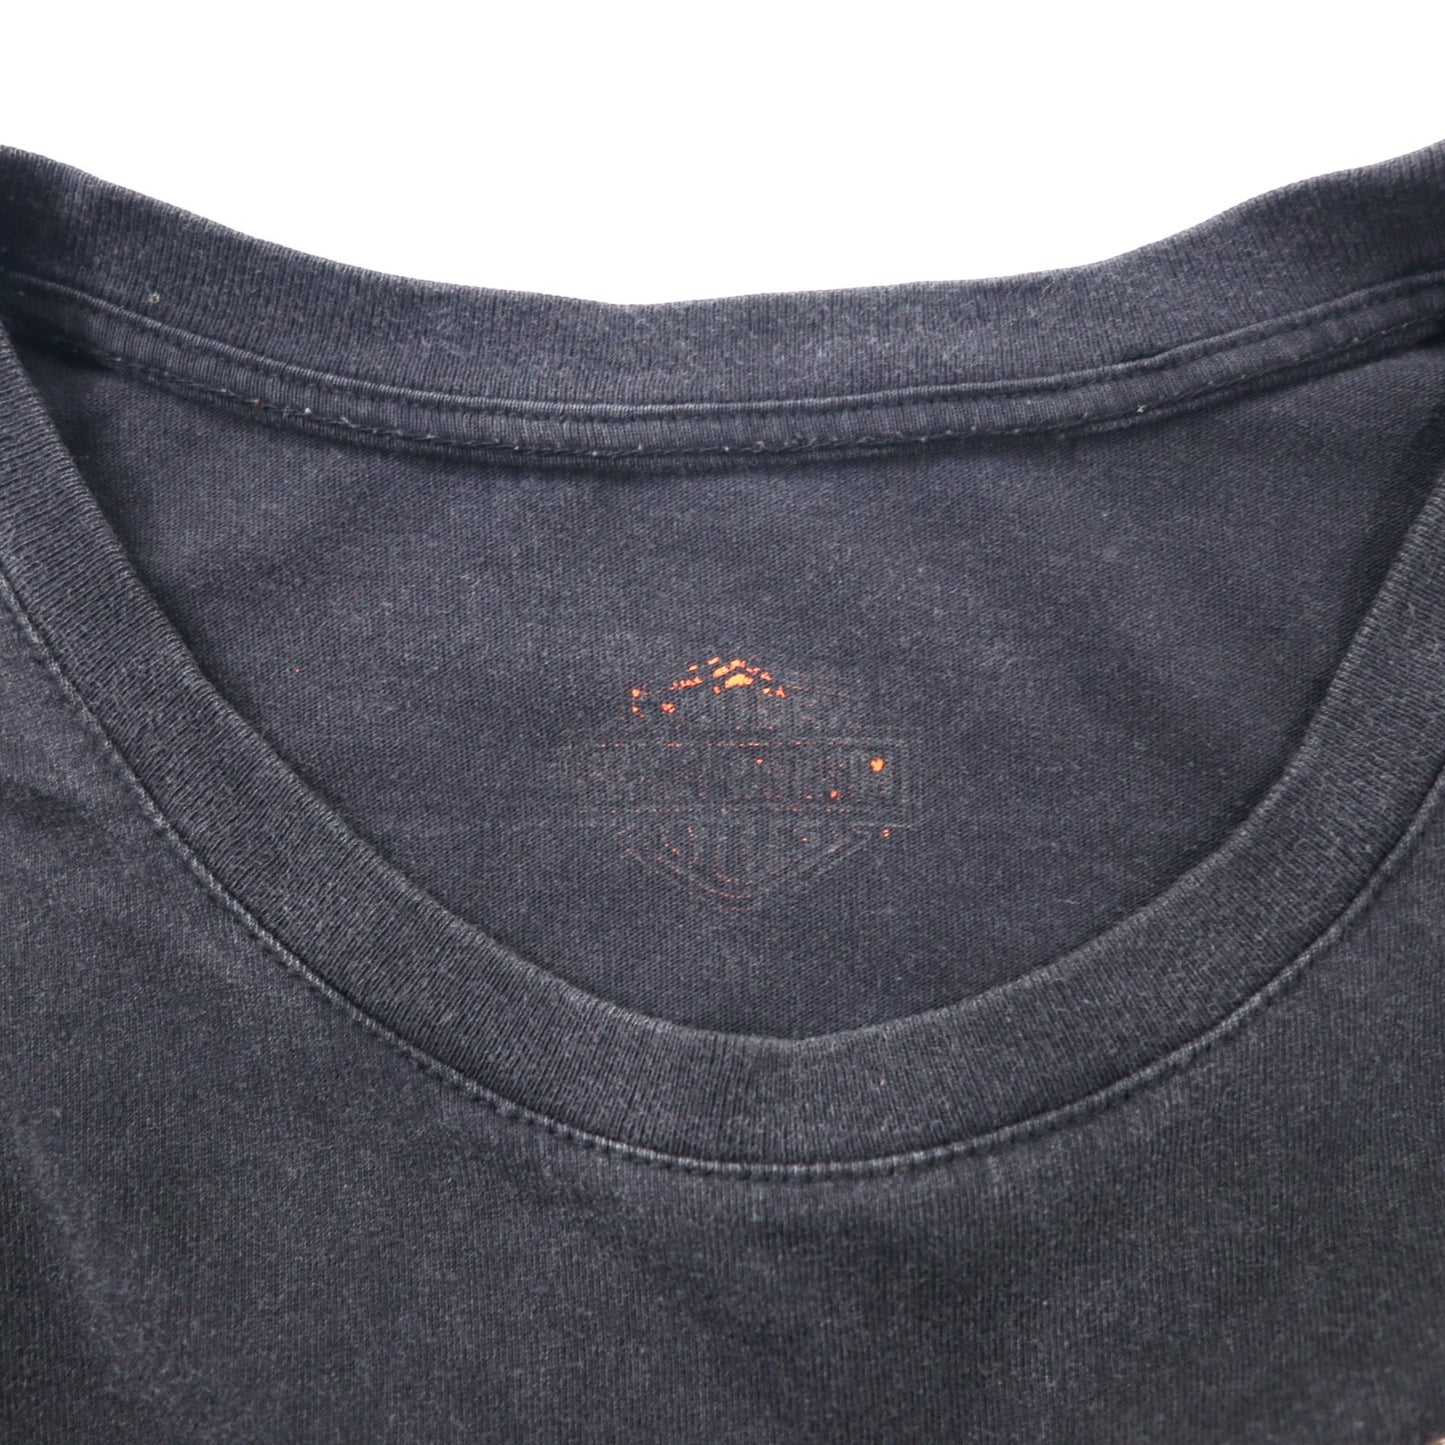 HARLEY DAVIDSON ロゴプリント Tシャツ XL ブラック コットン 両面プリント